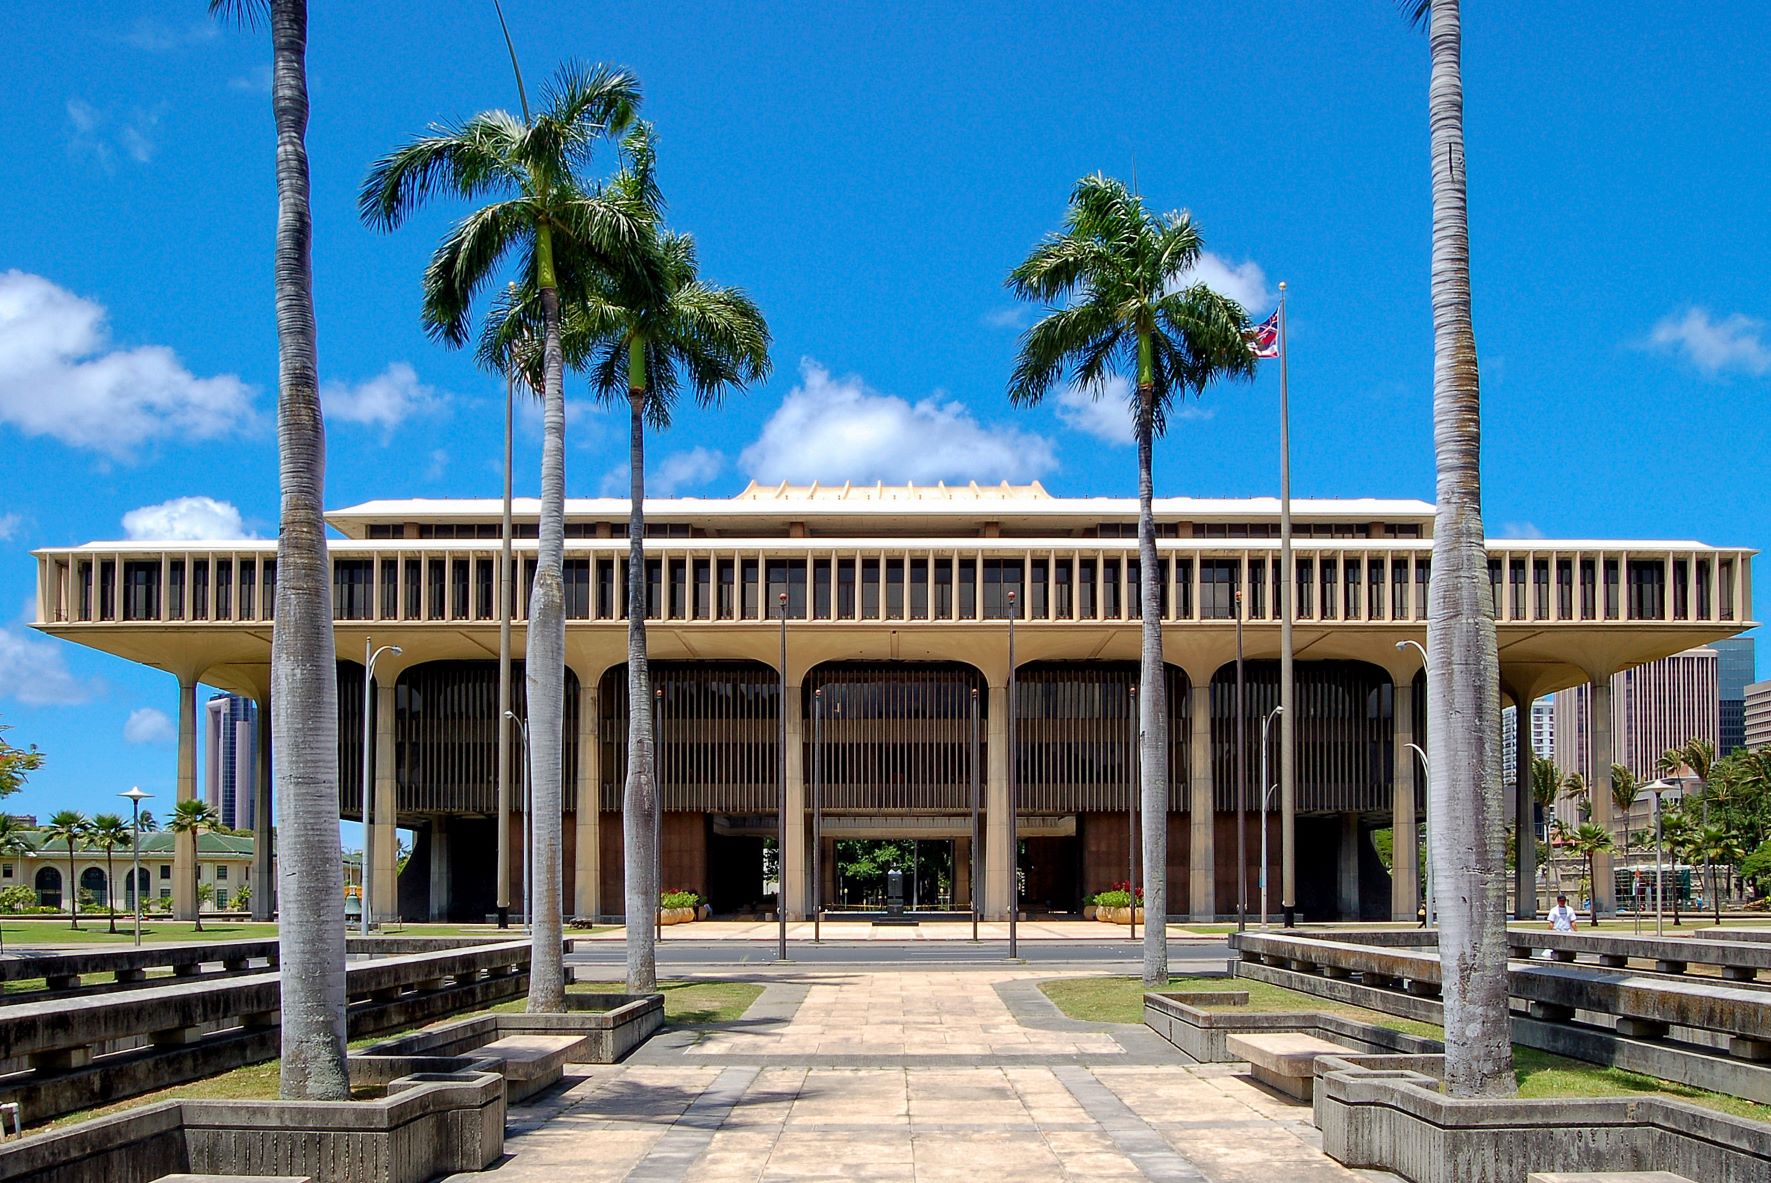 The Hawaii state capitol building in Honolulu, Hawaii.